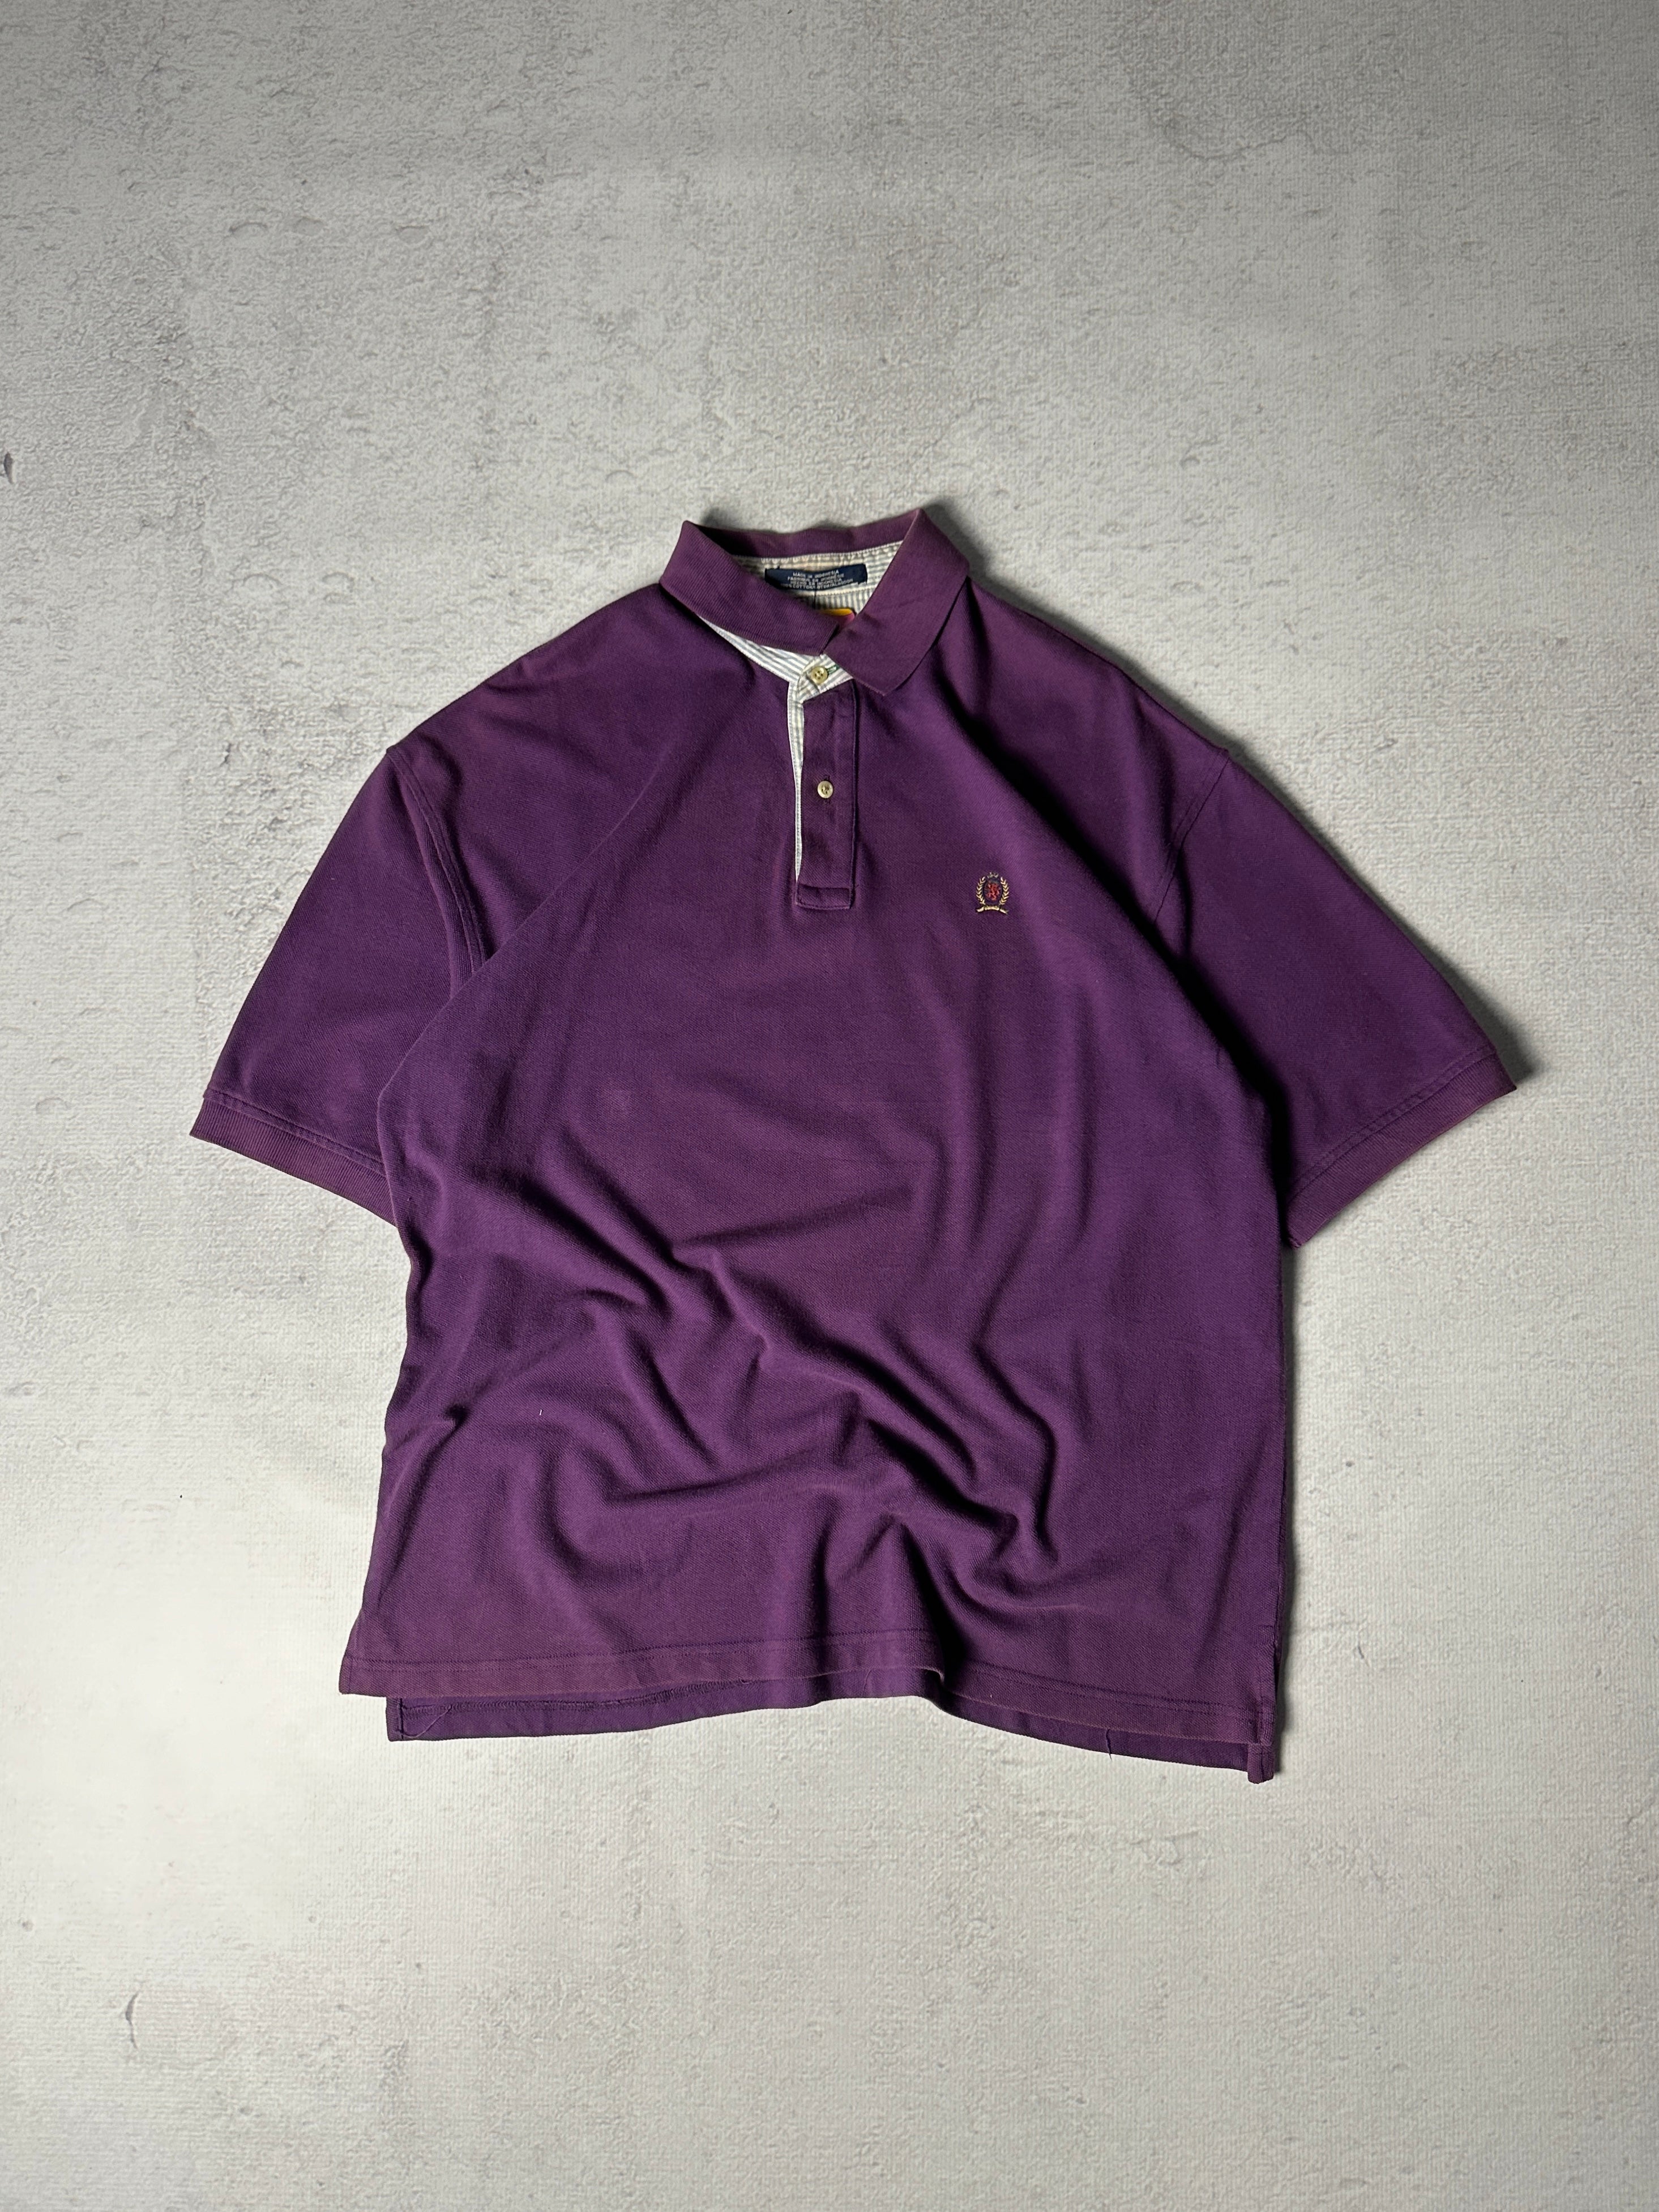 Vintage Tommy Hilfiger Polo Shirt - Men's XL